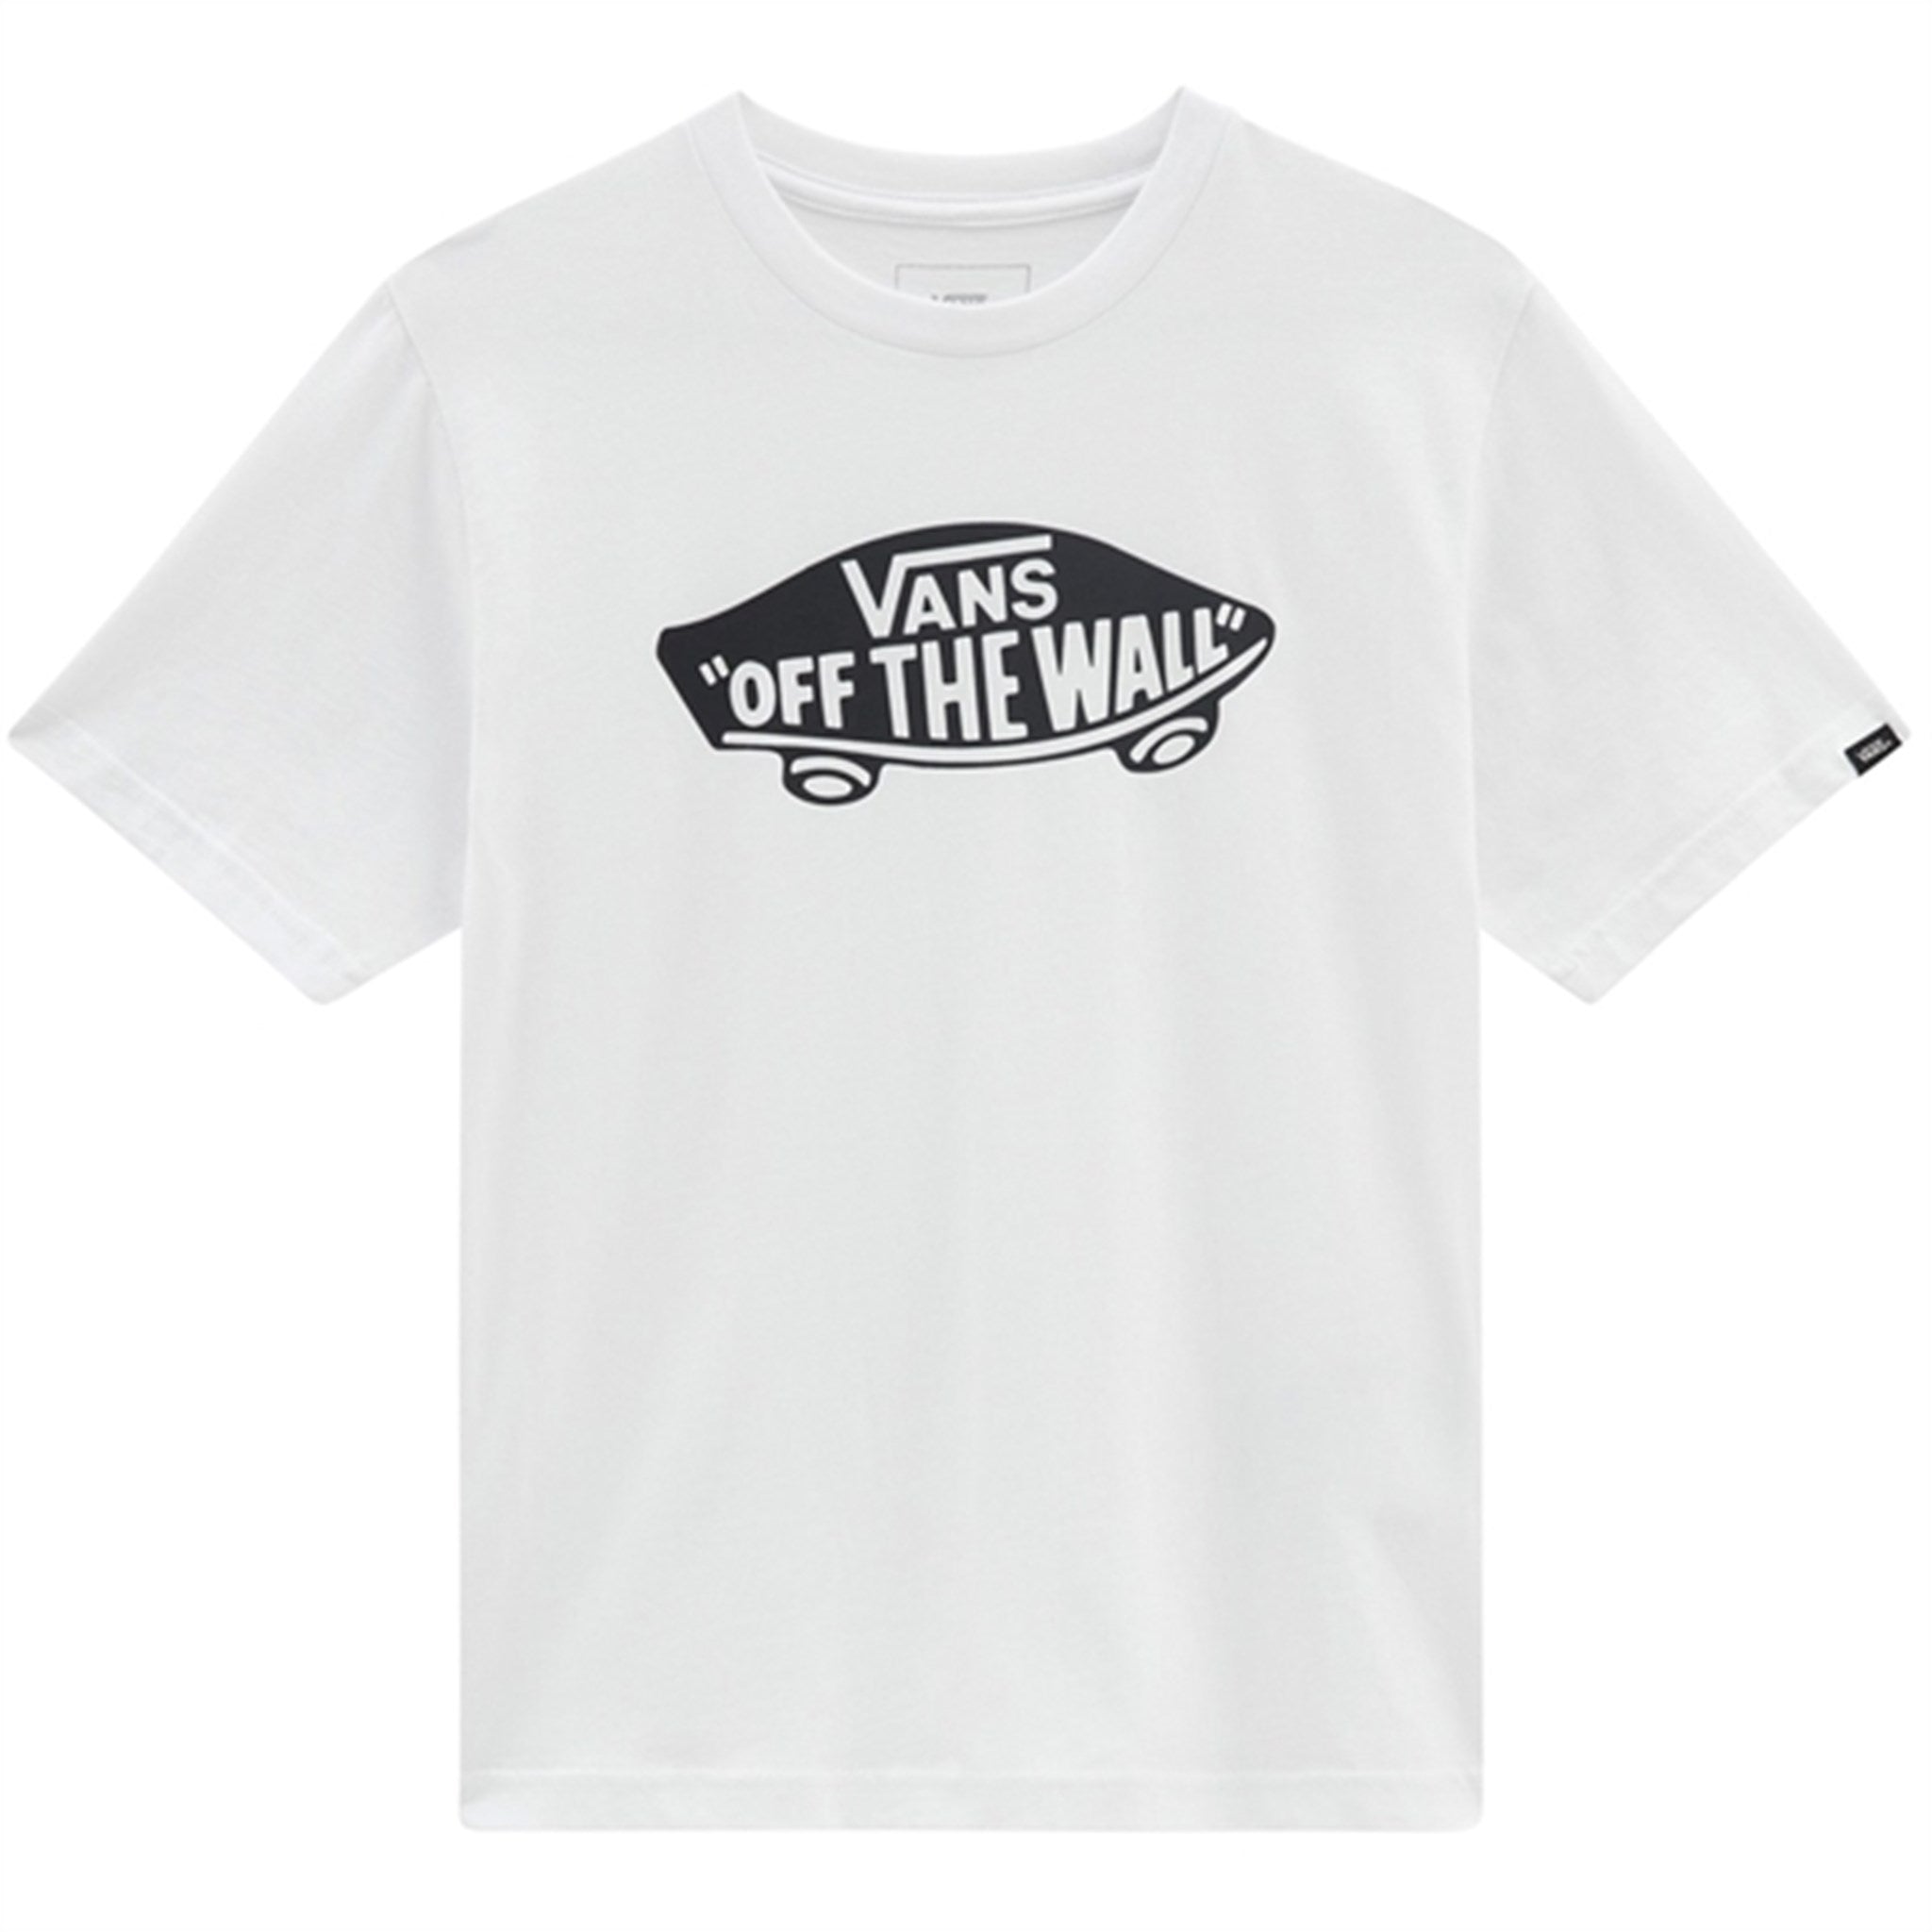 VANS OTW T-shirt White/Black - Str. XL